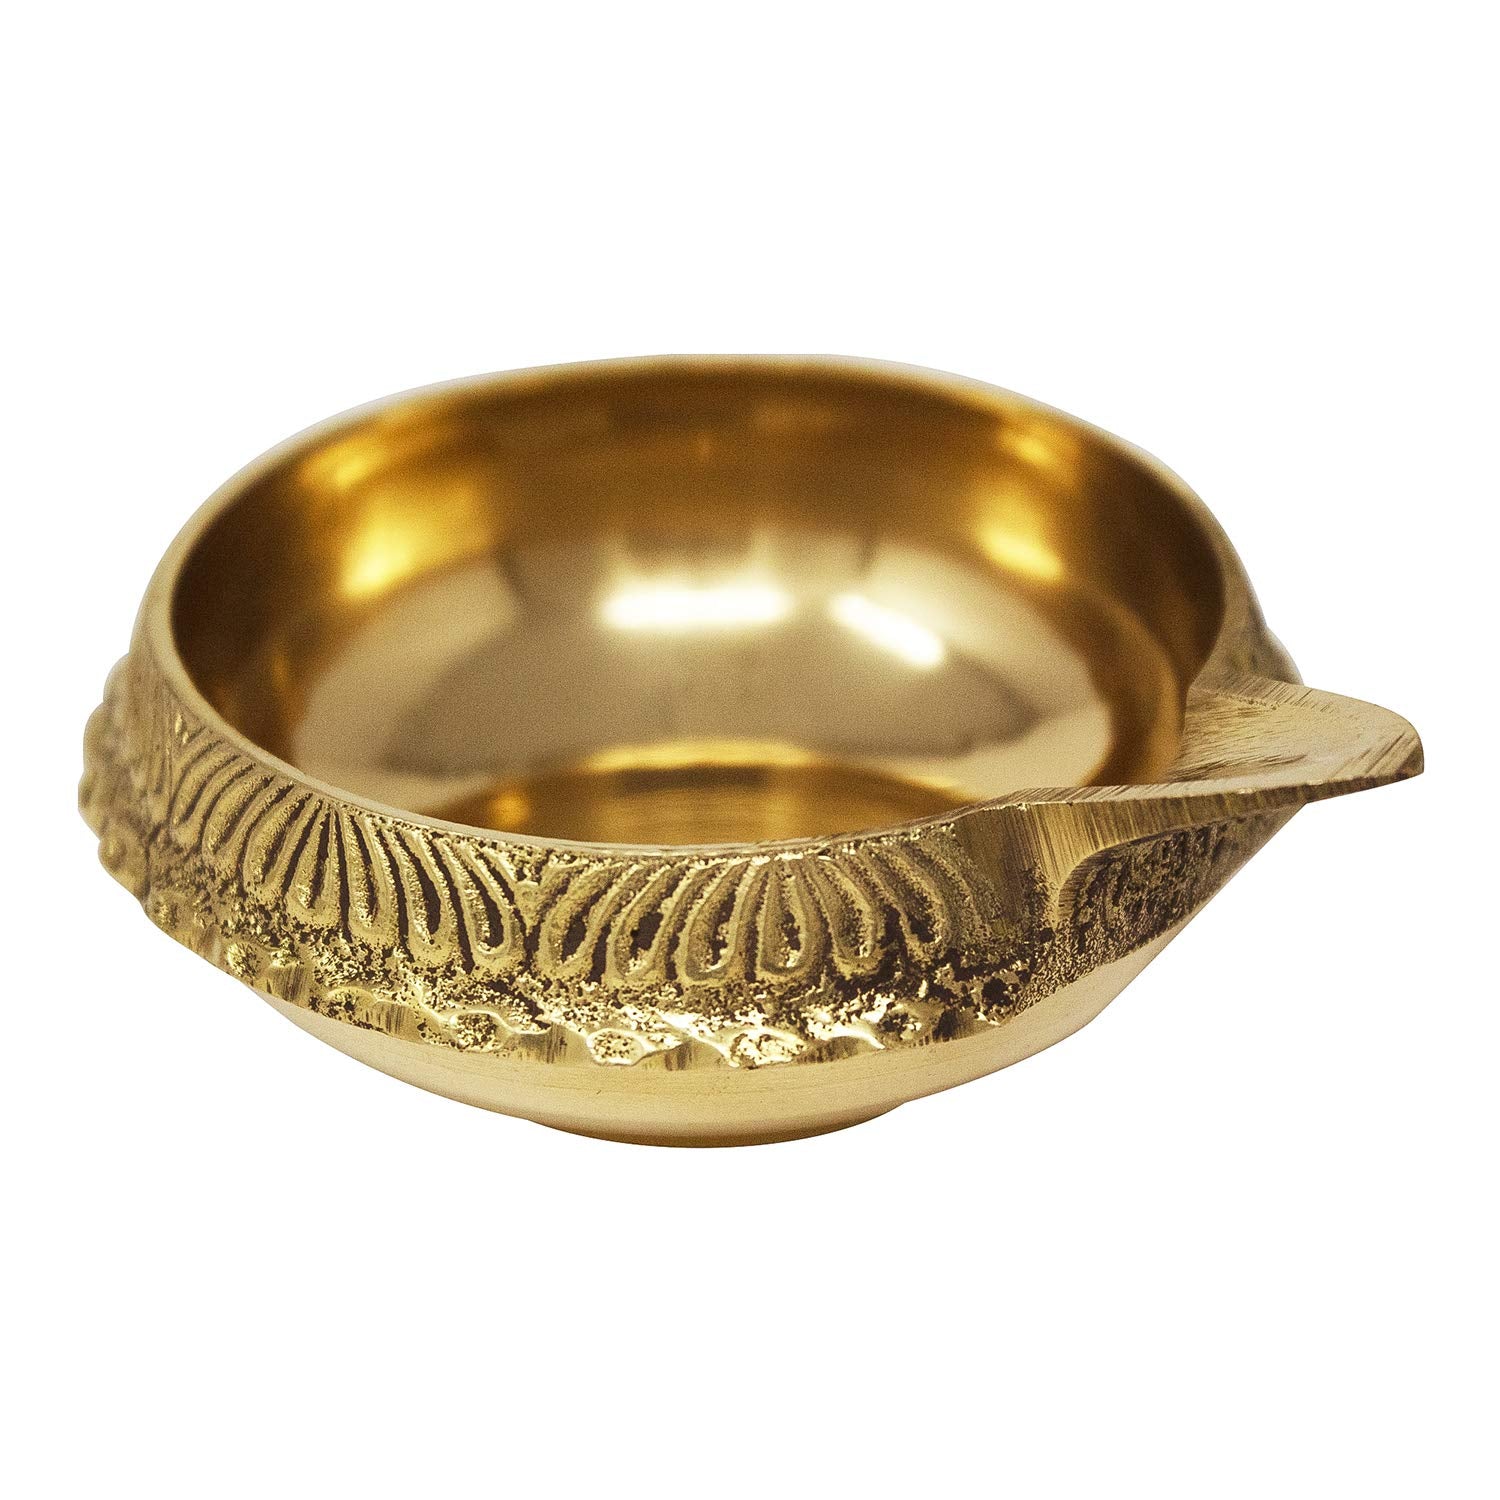 BENGALEN Kuber Diya Big Brass Handmade Oil Lamp with Golden Engraved Made of Virgin Brass Metal Diwali Diya Vilakku for Diwali Decoration Puja Traditional Indian Deepawali Pooja Gift Items